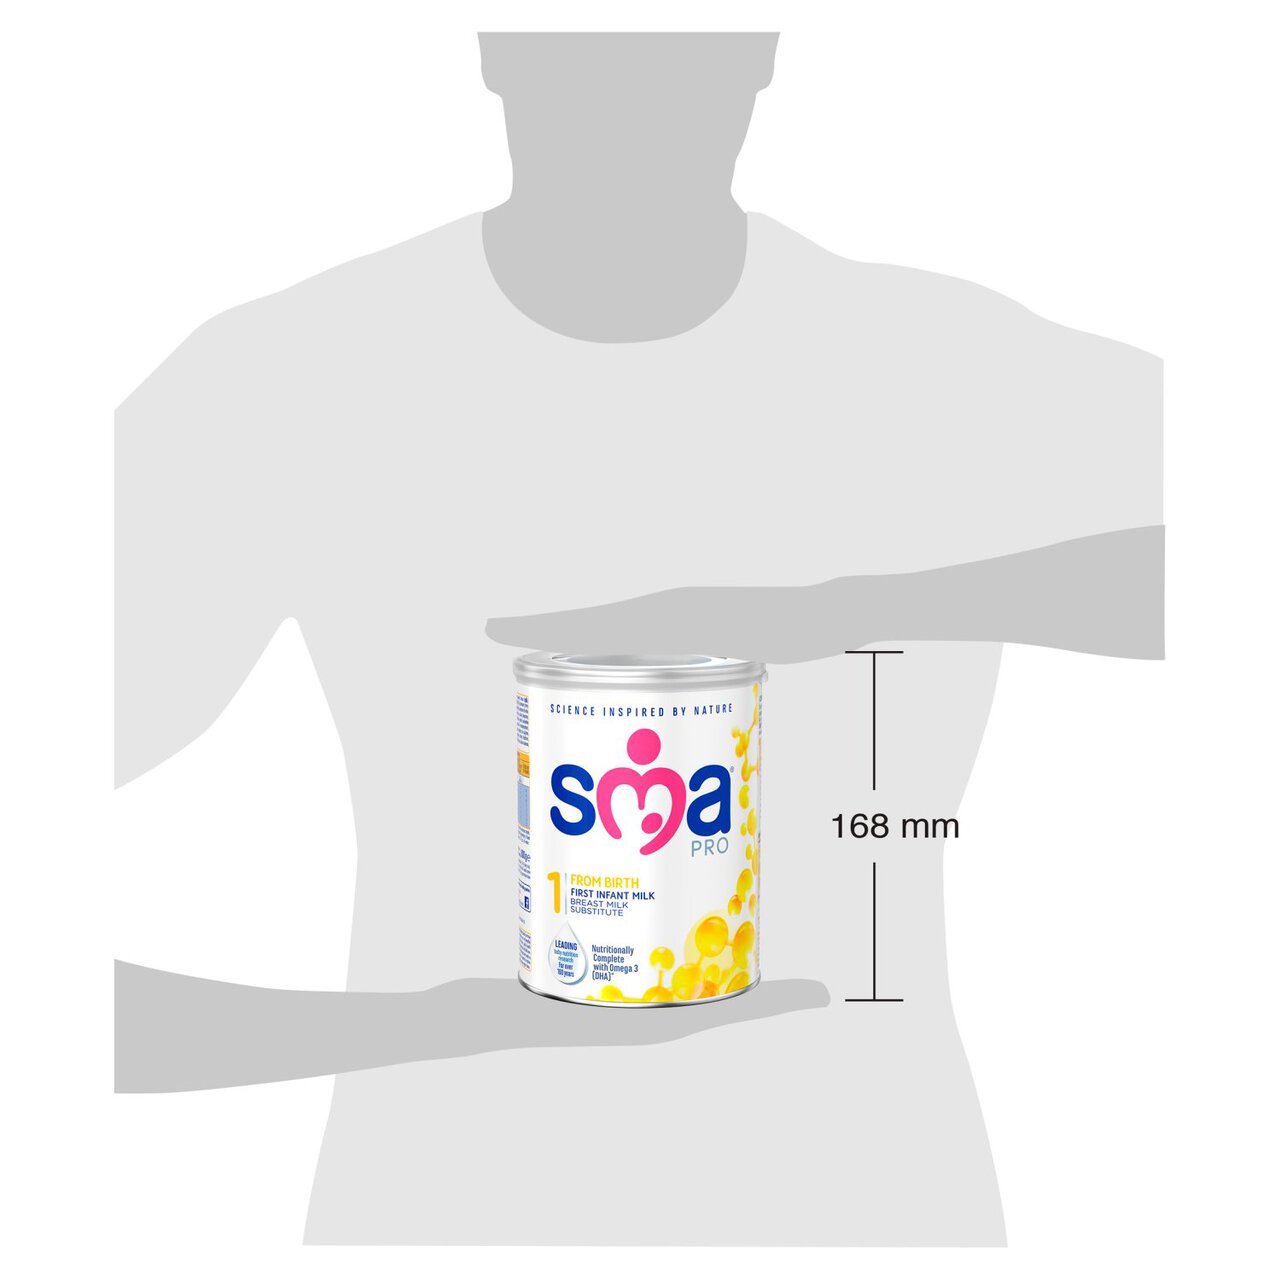 SMA Pro 1 First Infant Milk Powder, From Birth 800g